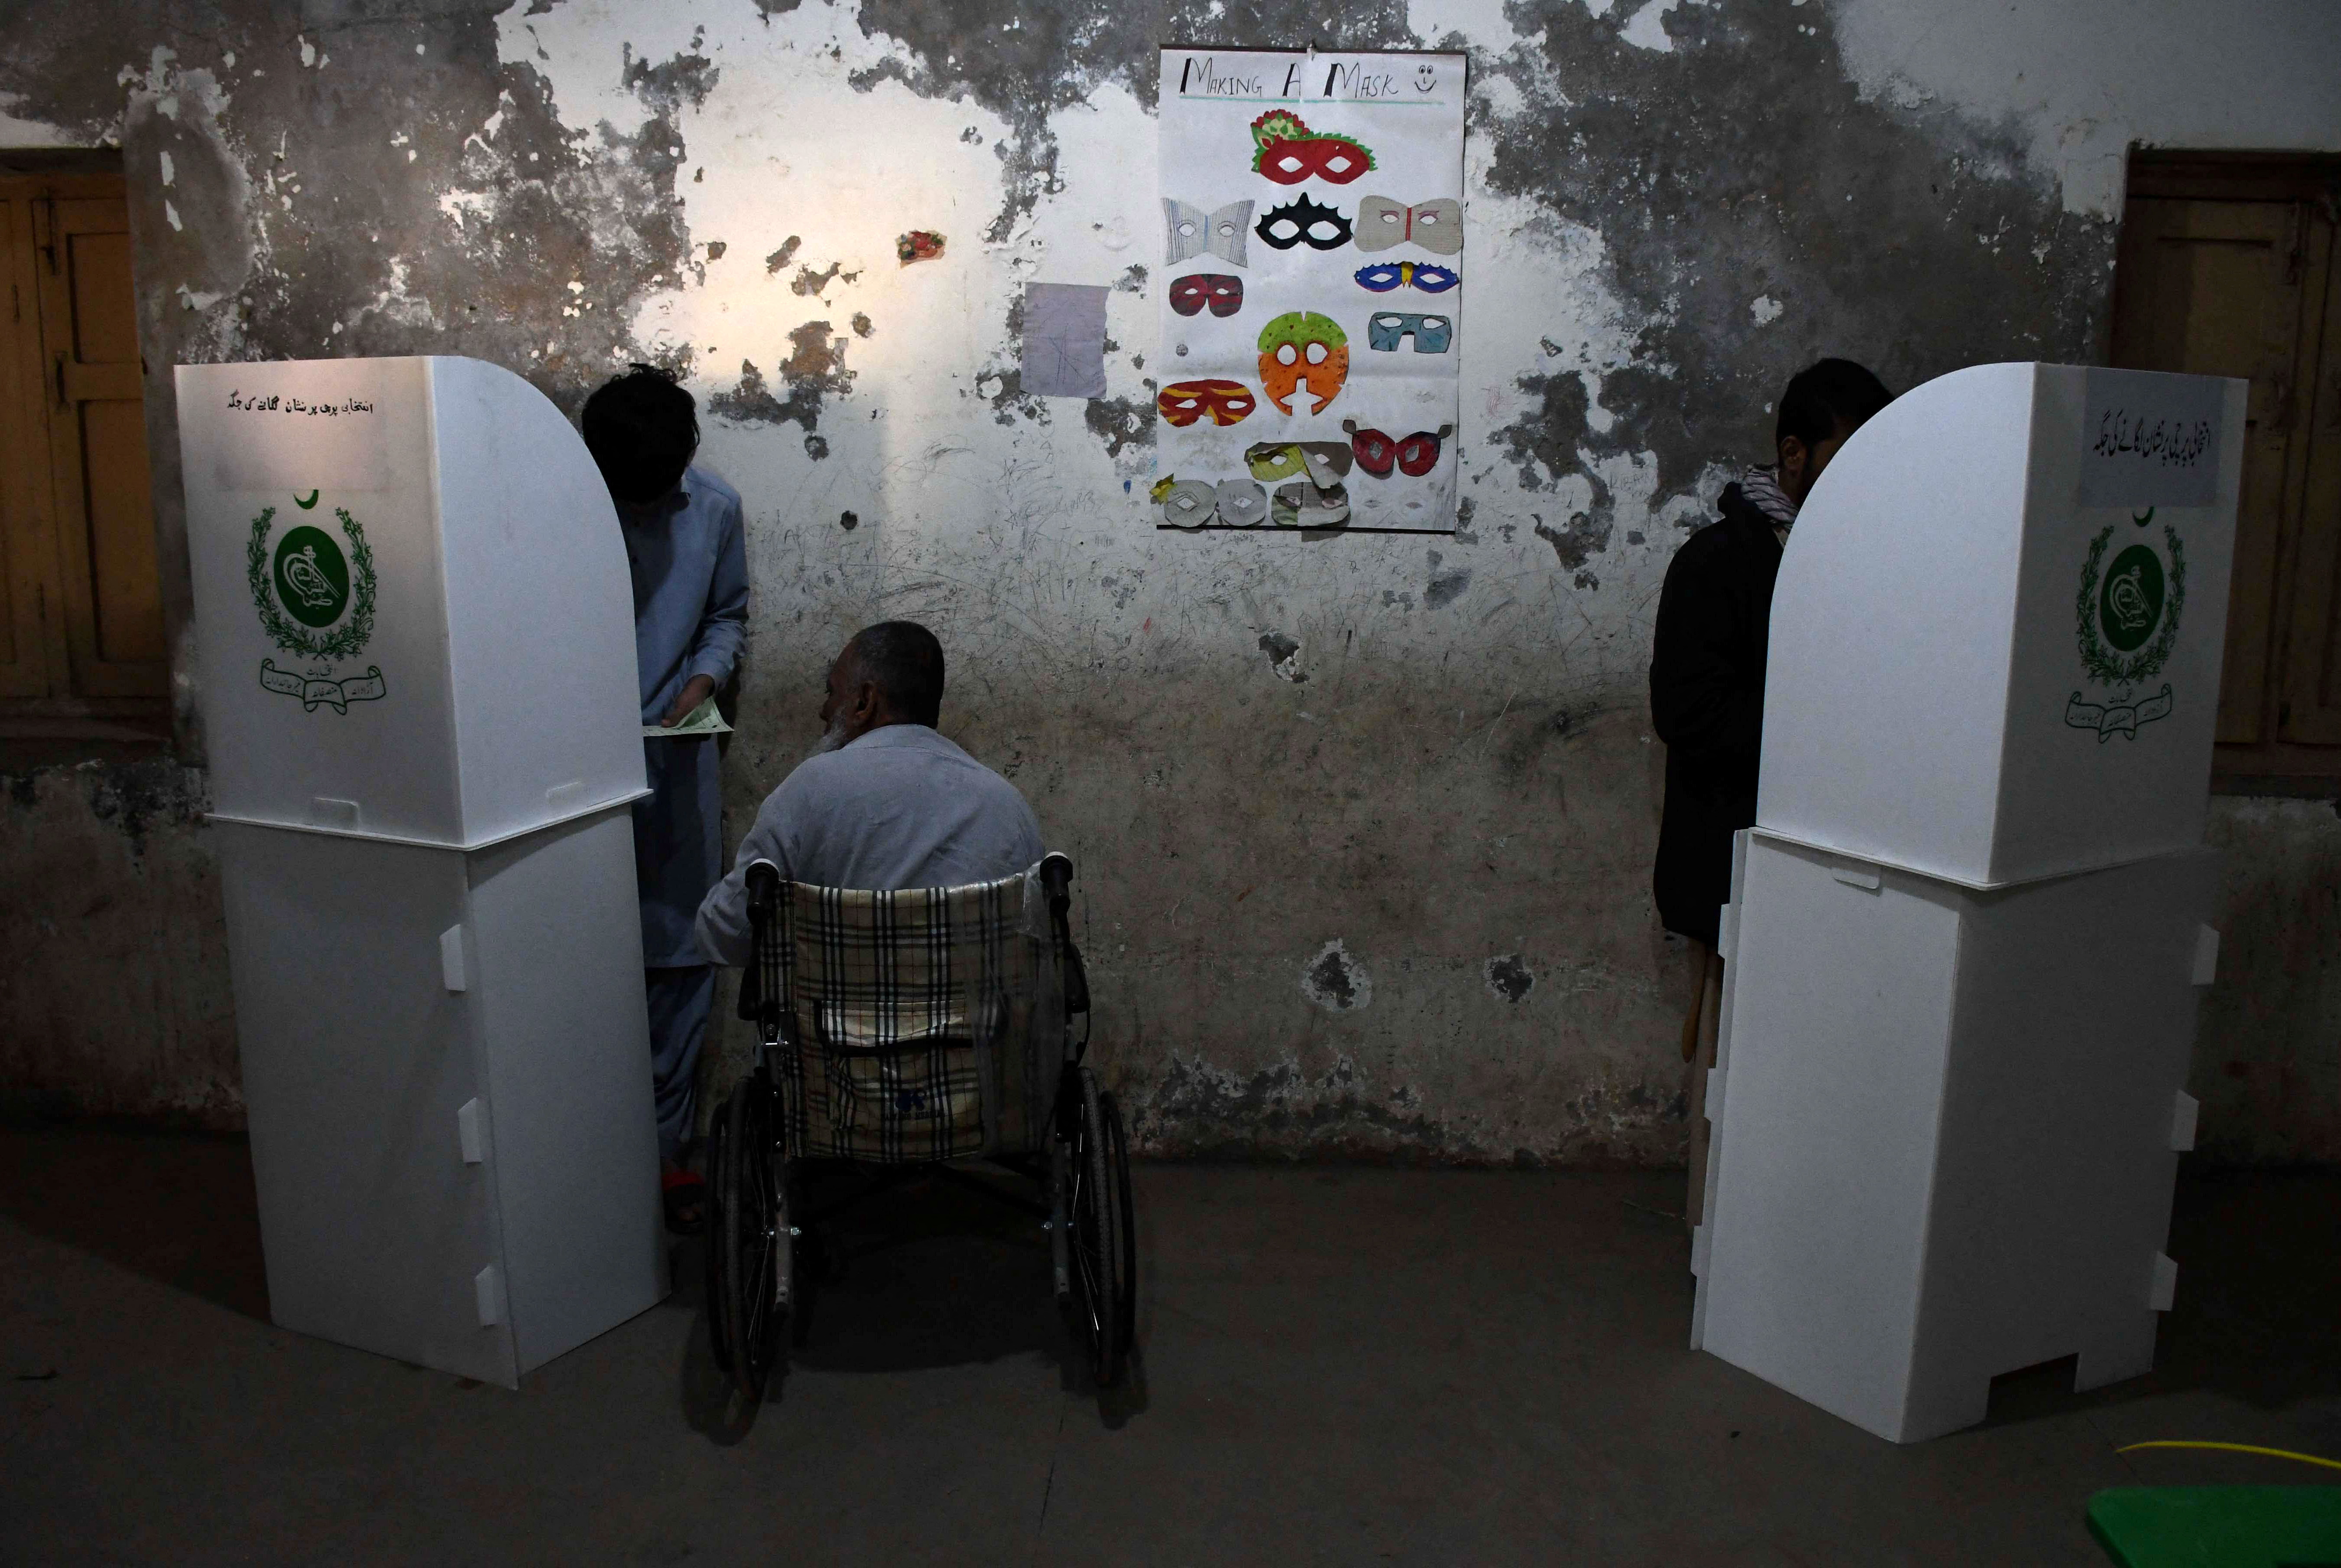 General election in Pakistan